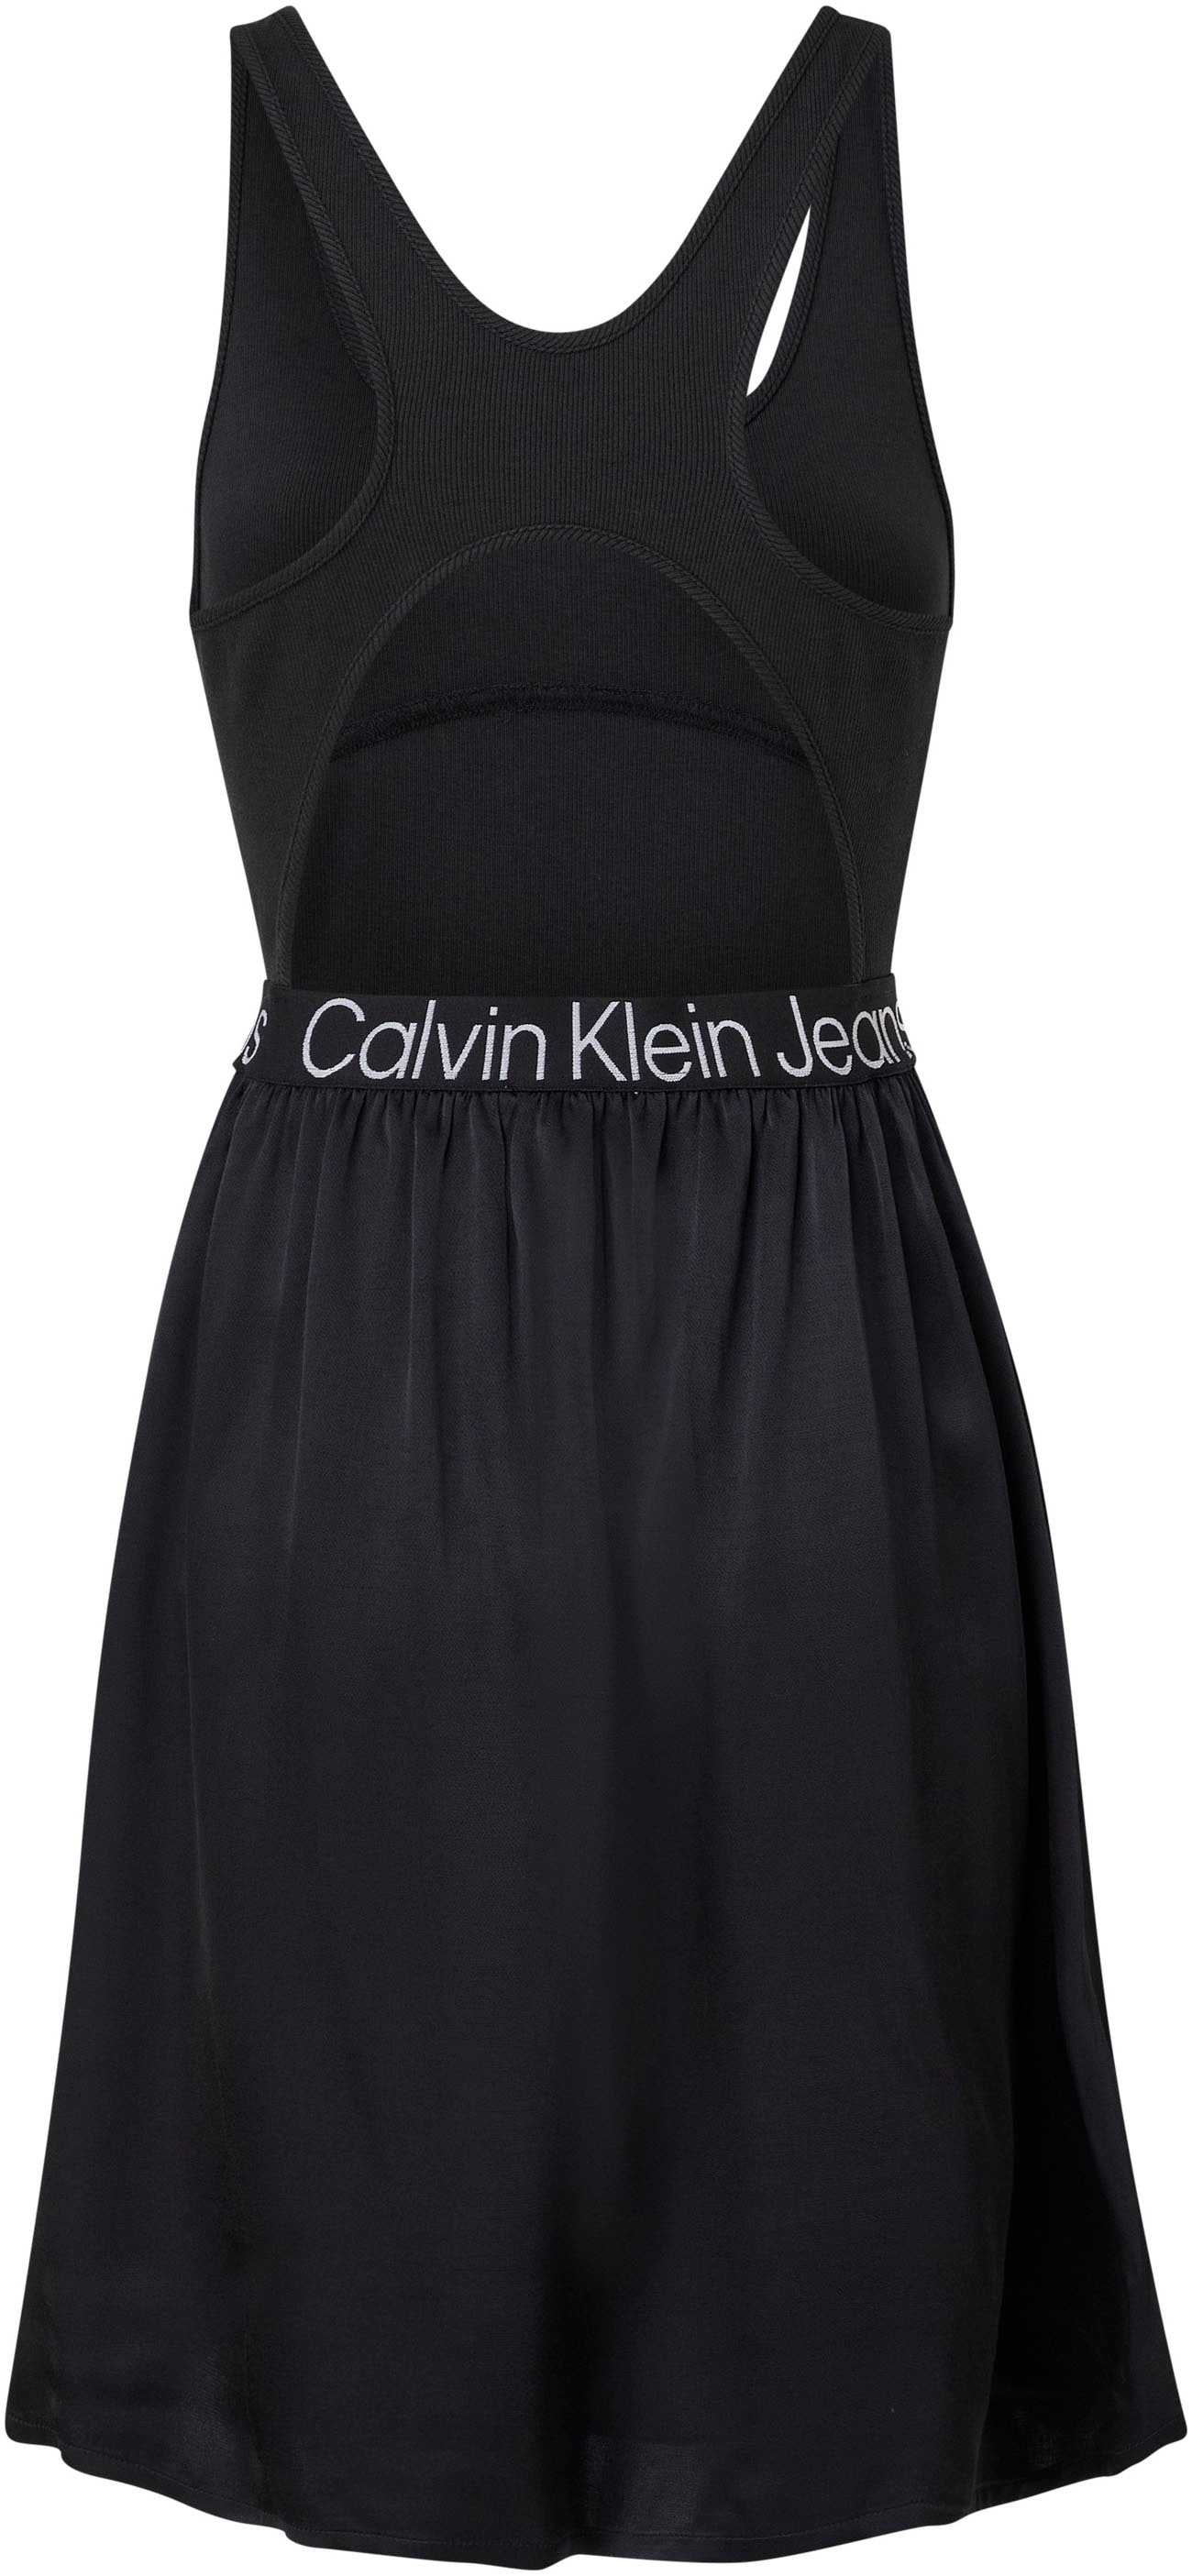 ♕ Calvin Klein Jeans Jerseykleid bestellen »RACERBACK DRESS« ELASTIC LOGO versandkostenfrei